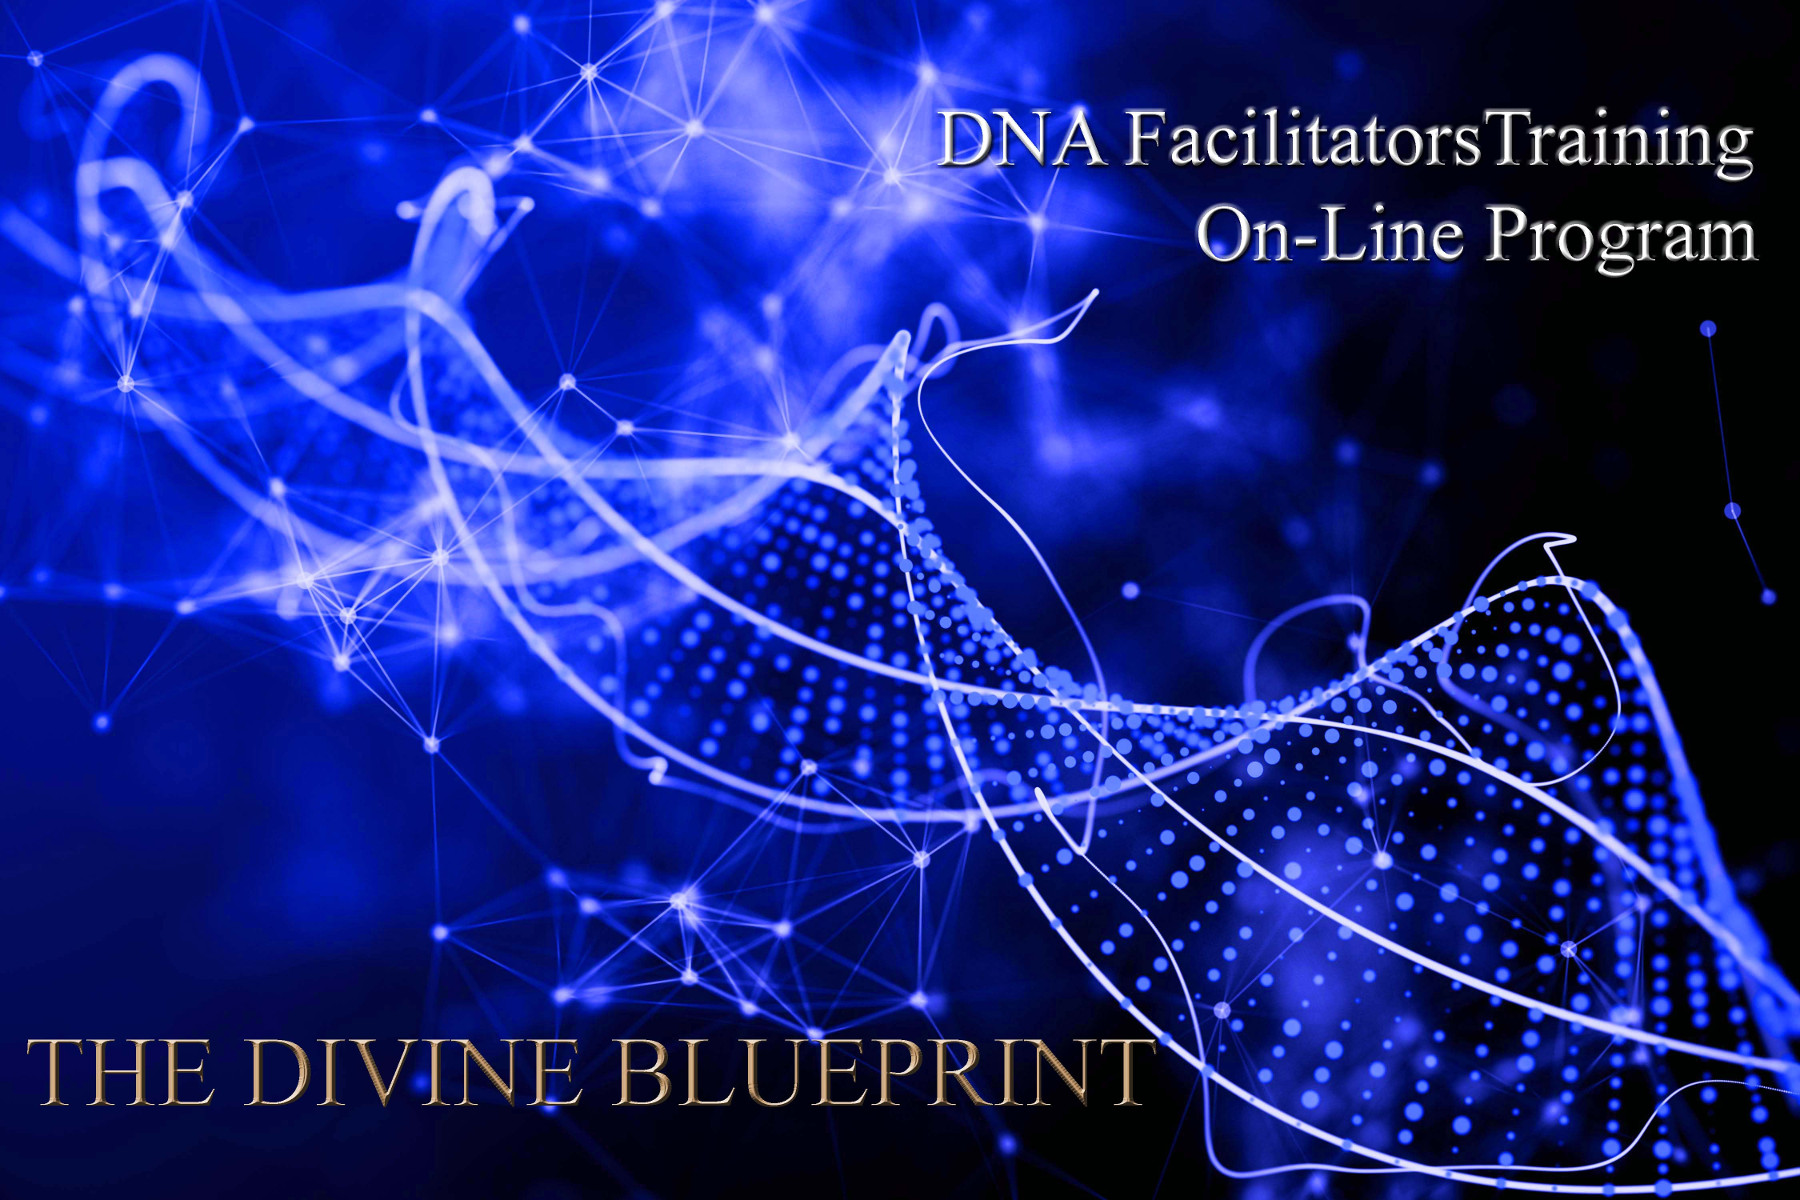 divine blueprint meaning